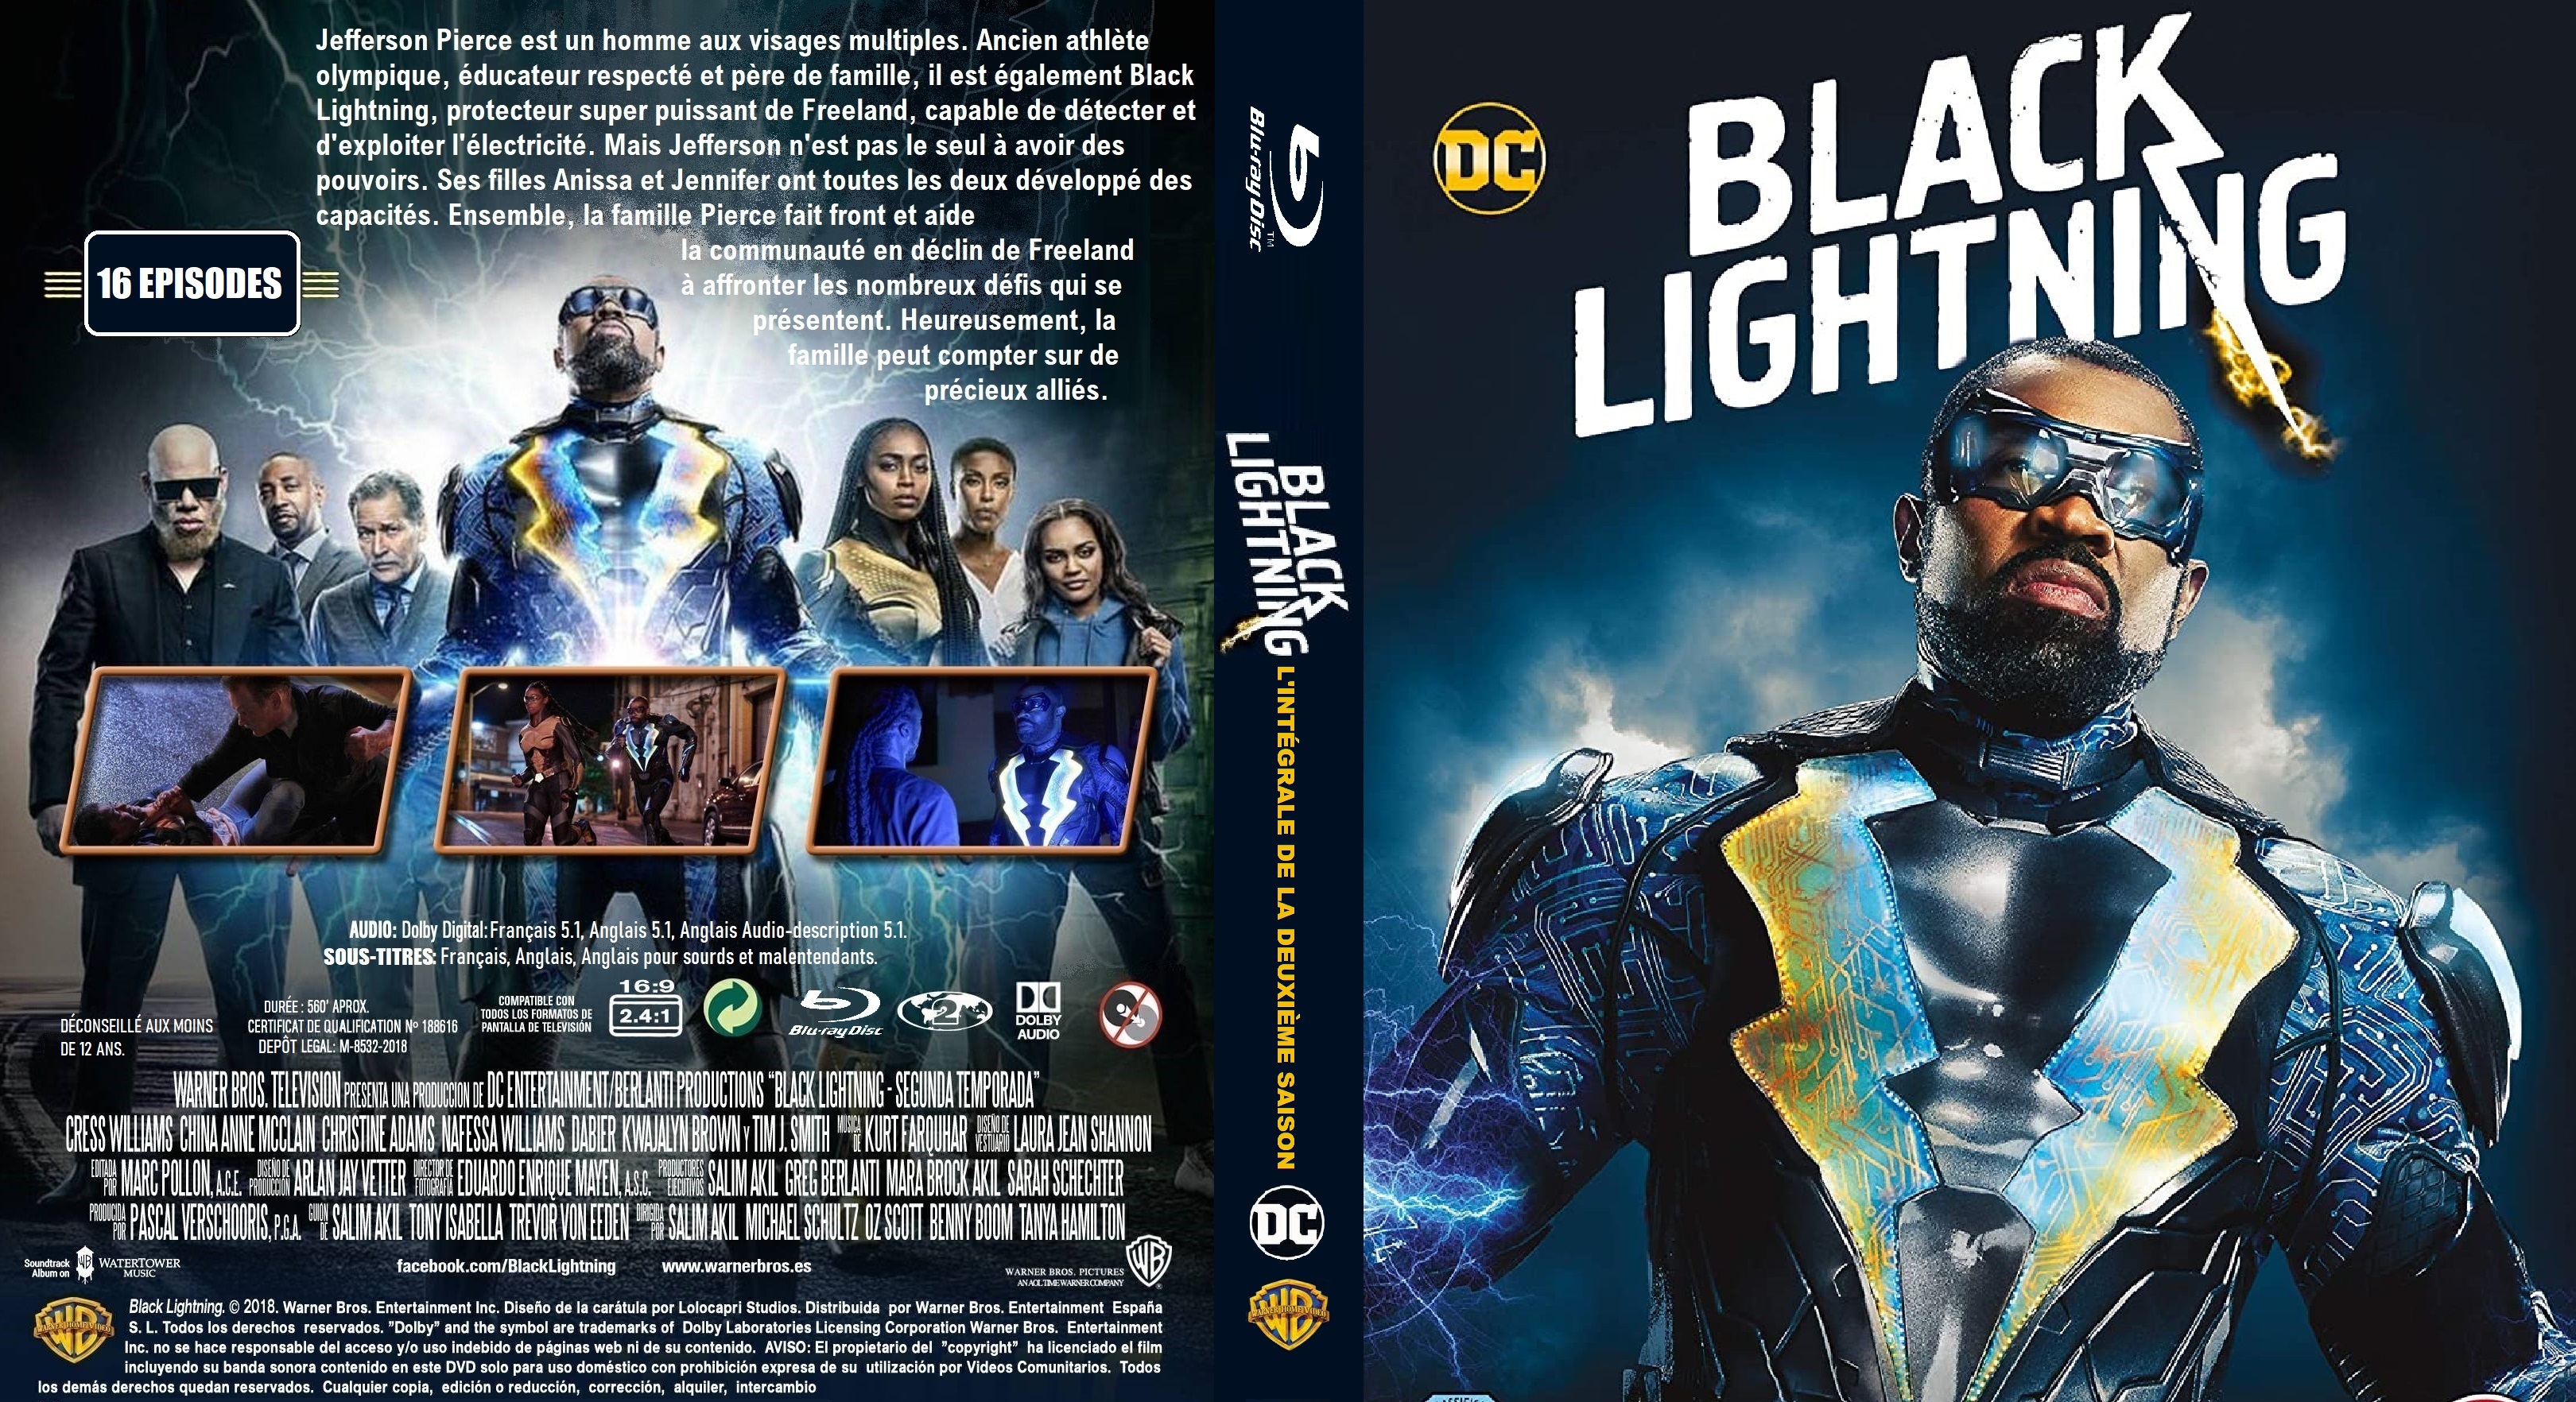 Jaquette DVD Black Lightning saison 2 custom (BLU-RAY) v2